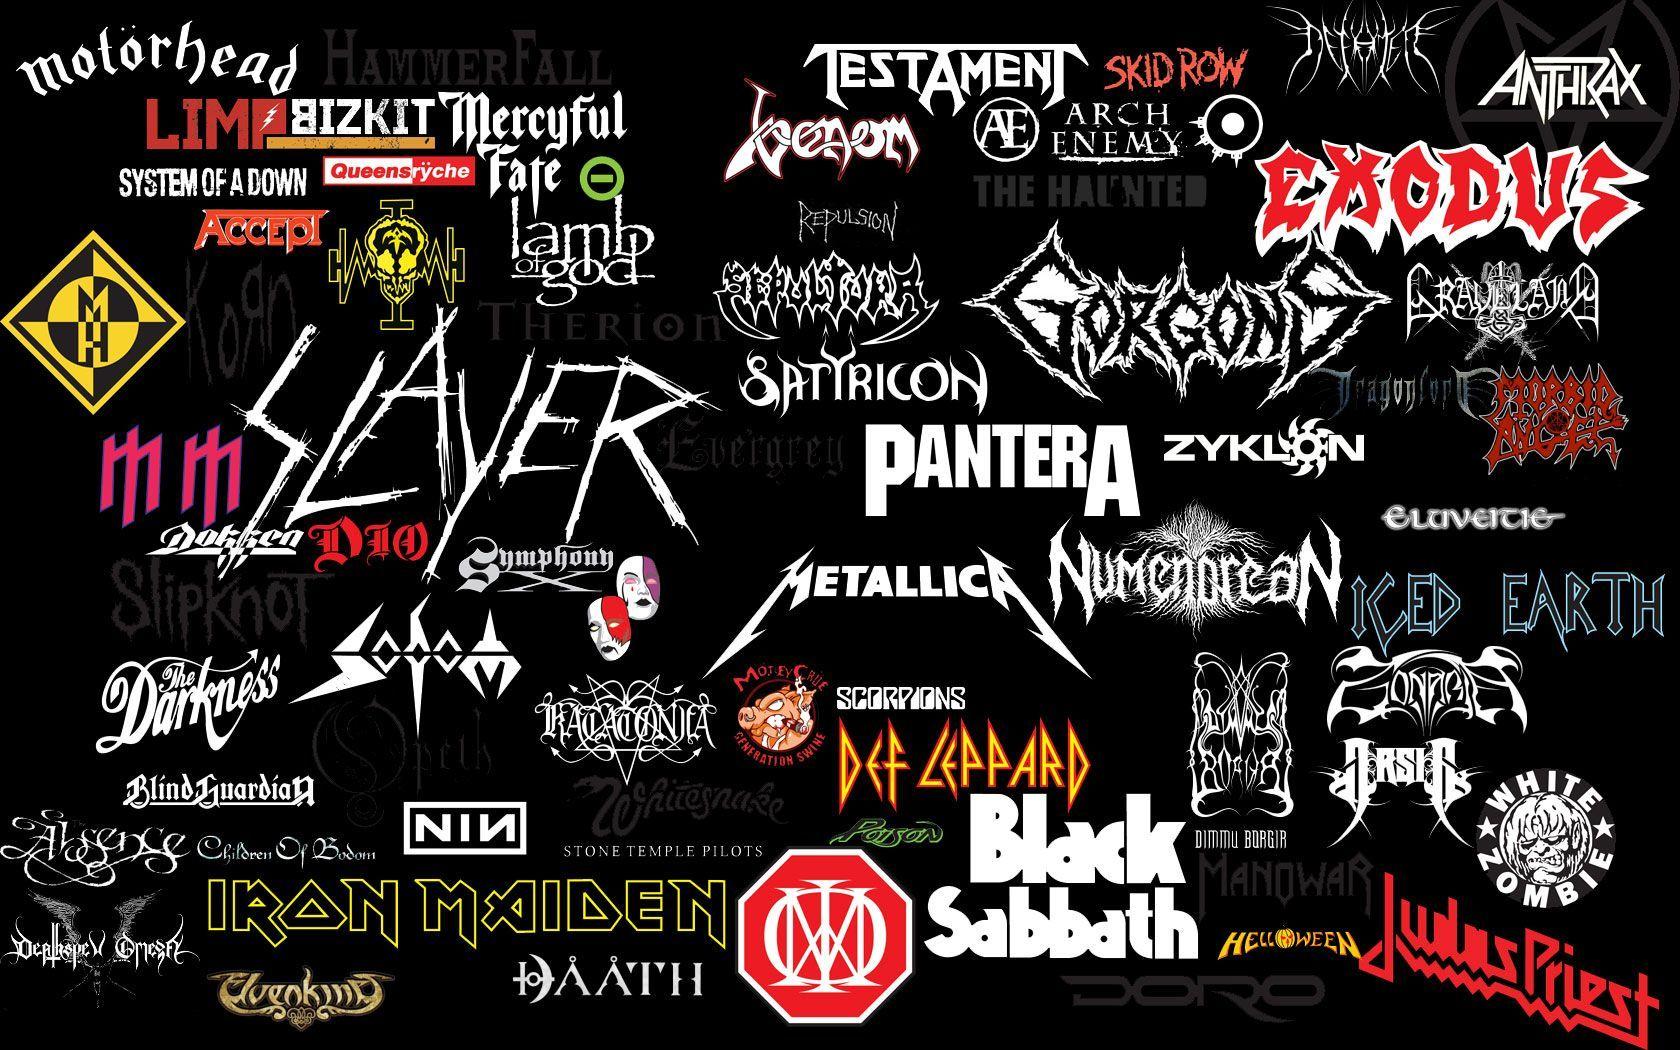 Ametal Rock Band Logo - Bands. Metal bands list of metal bands band names